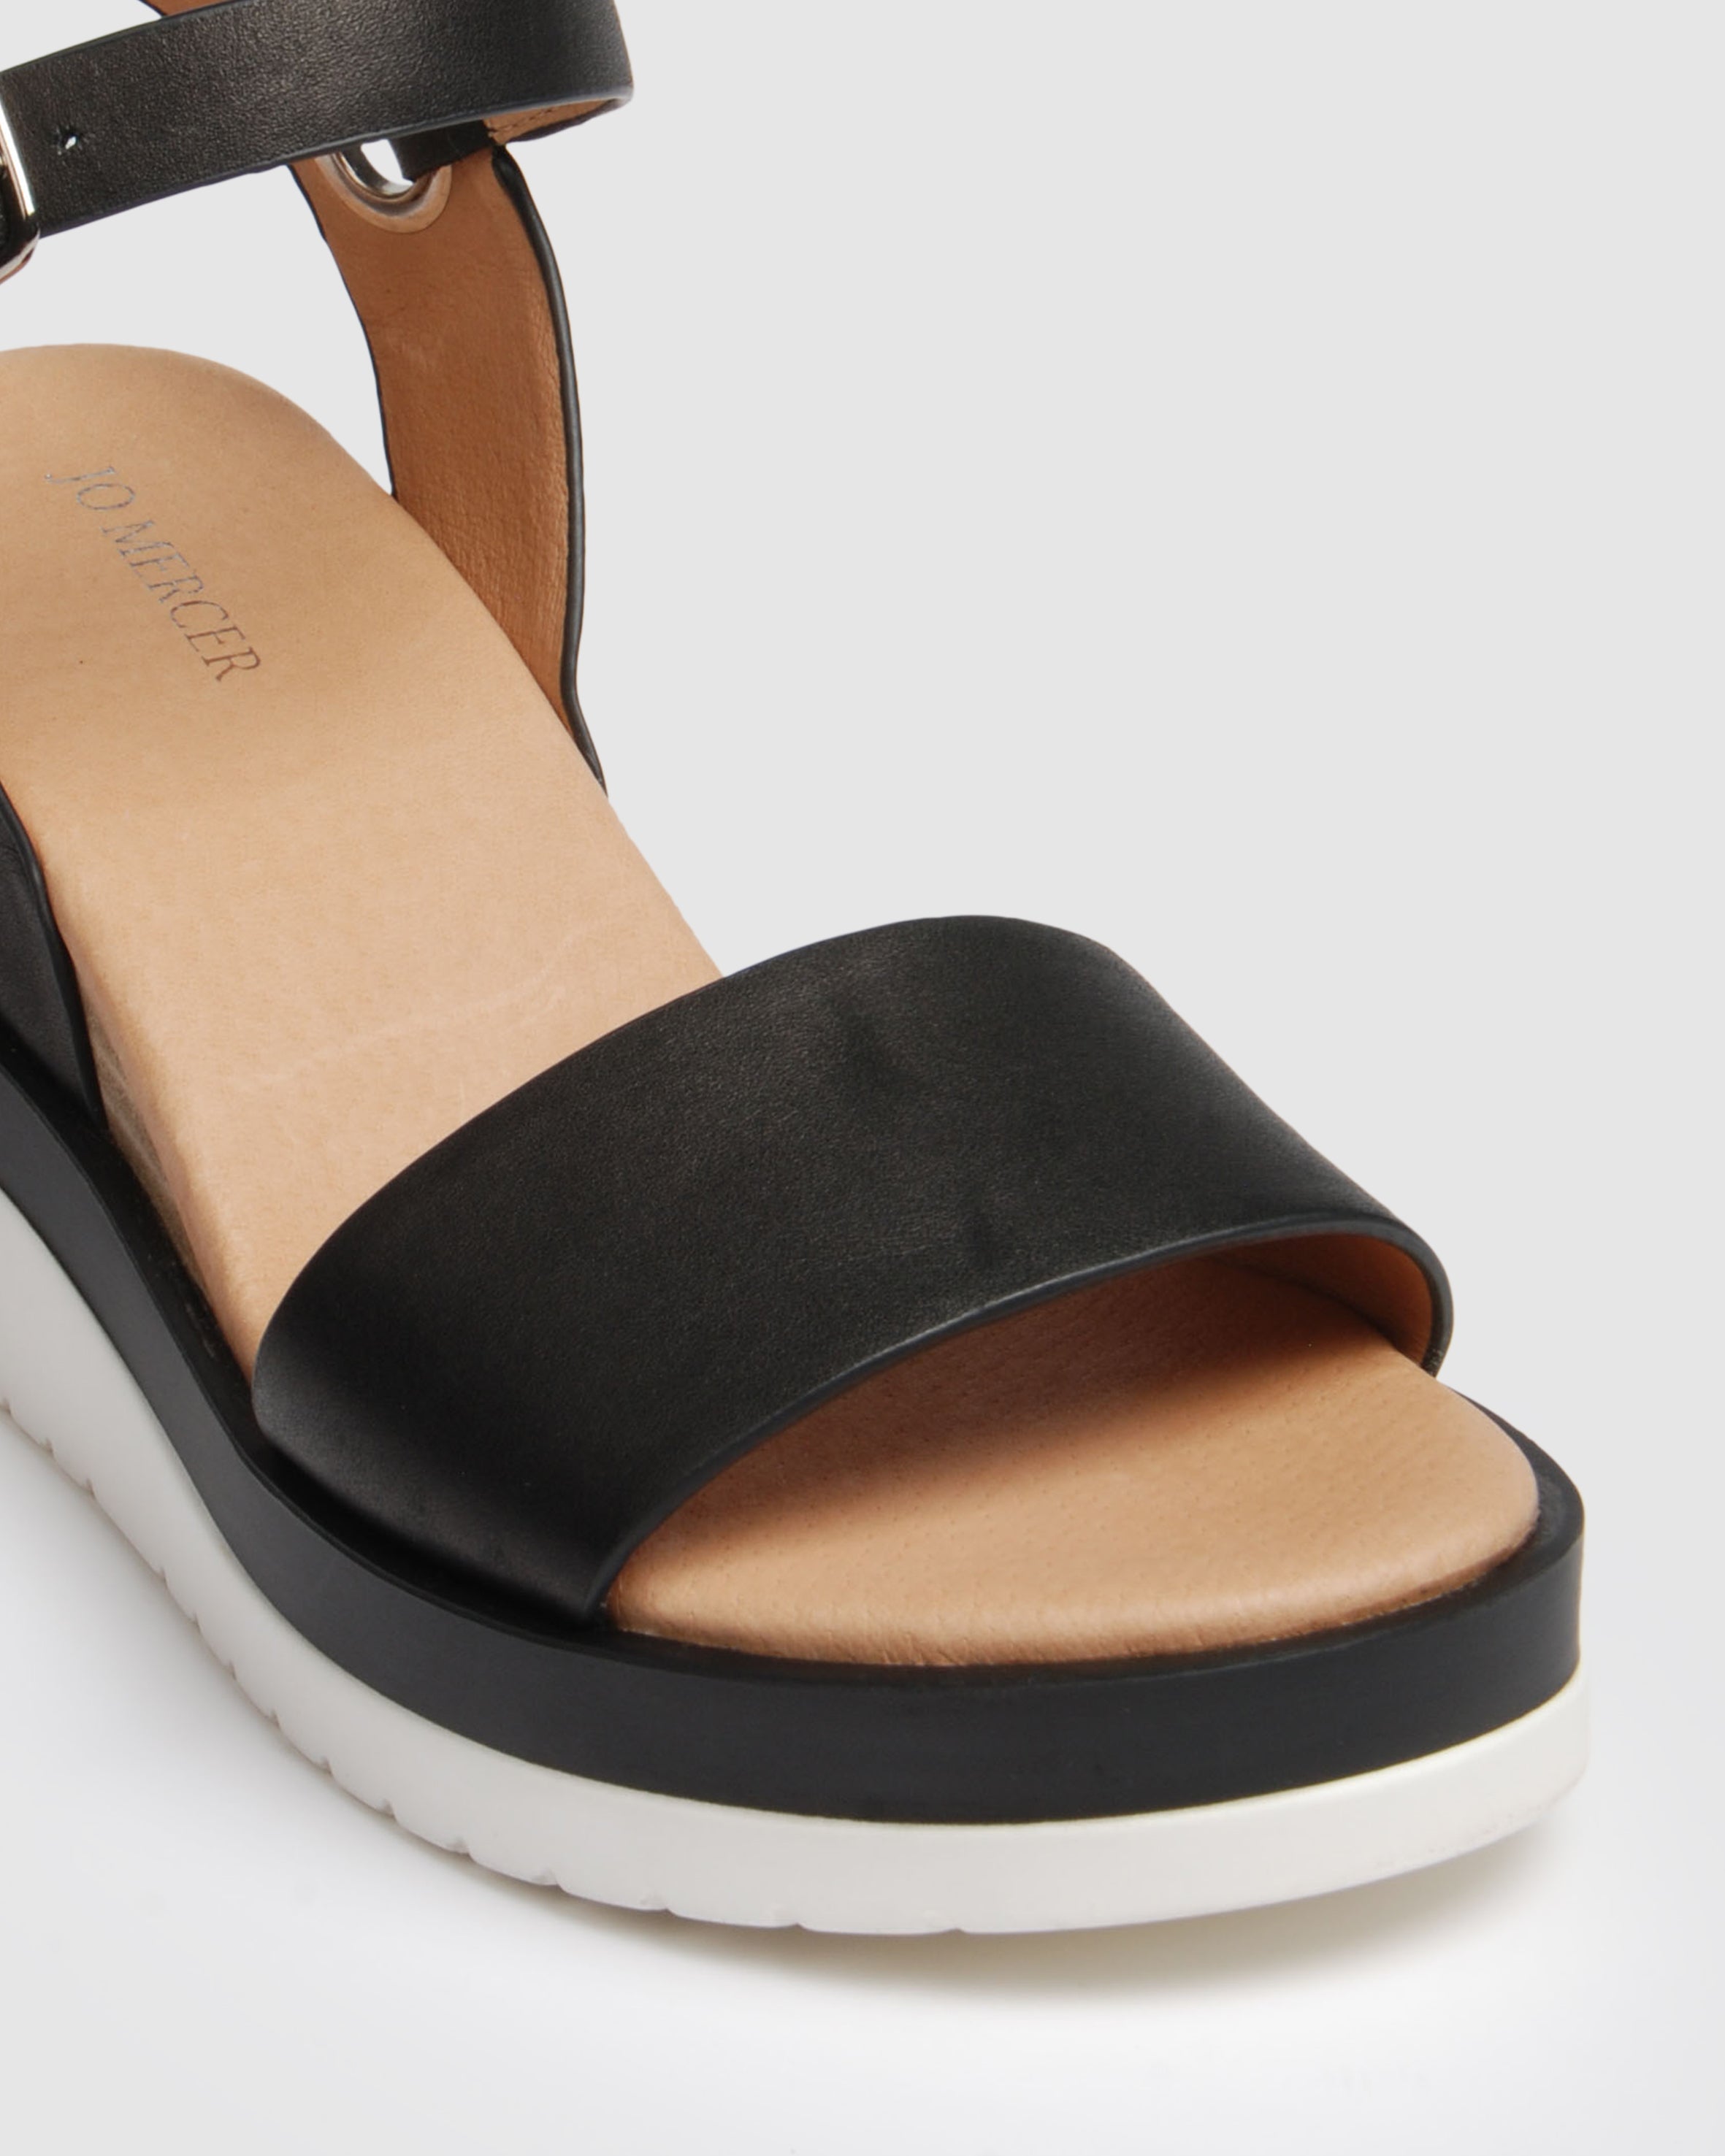 NEW Jo Mercer Kenzie Mid Heel Wedges Leather Sandals | eBay